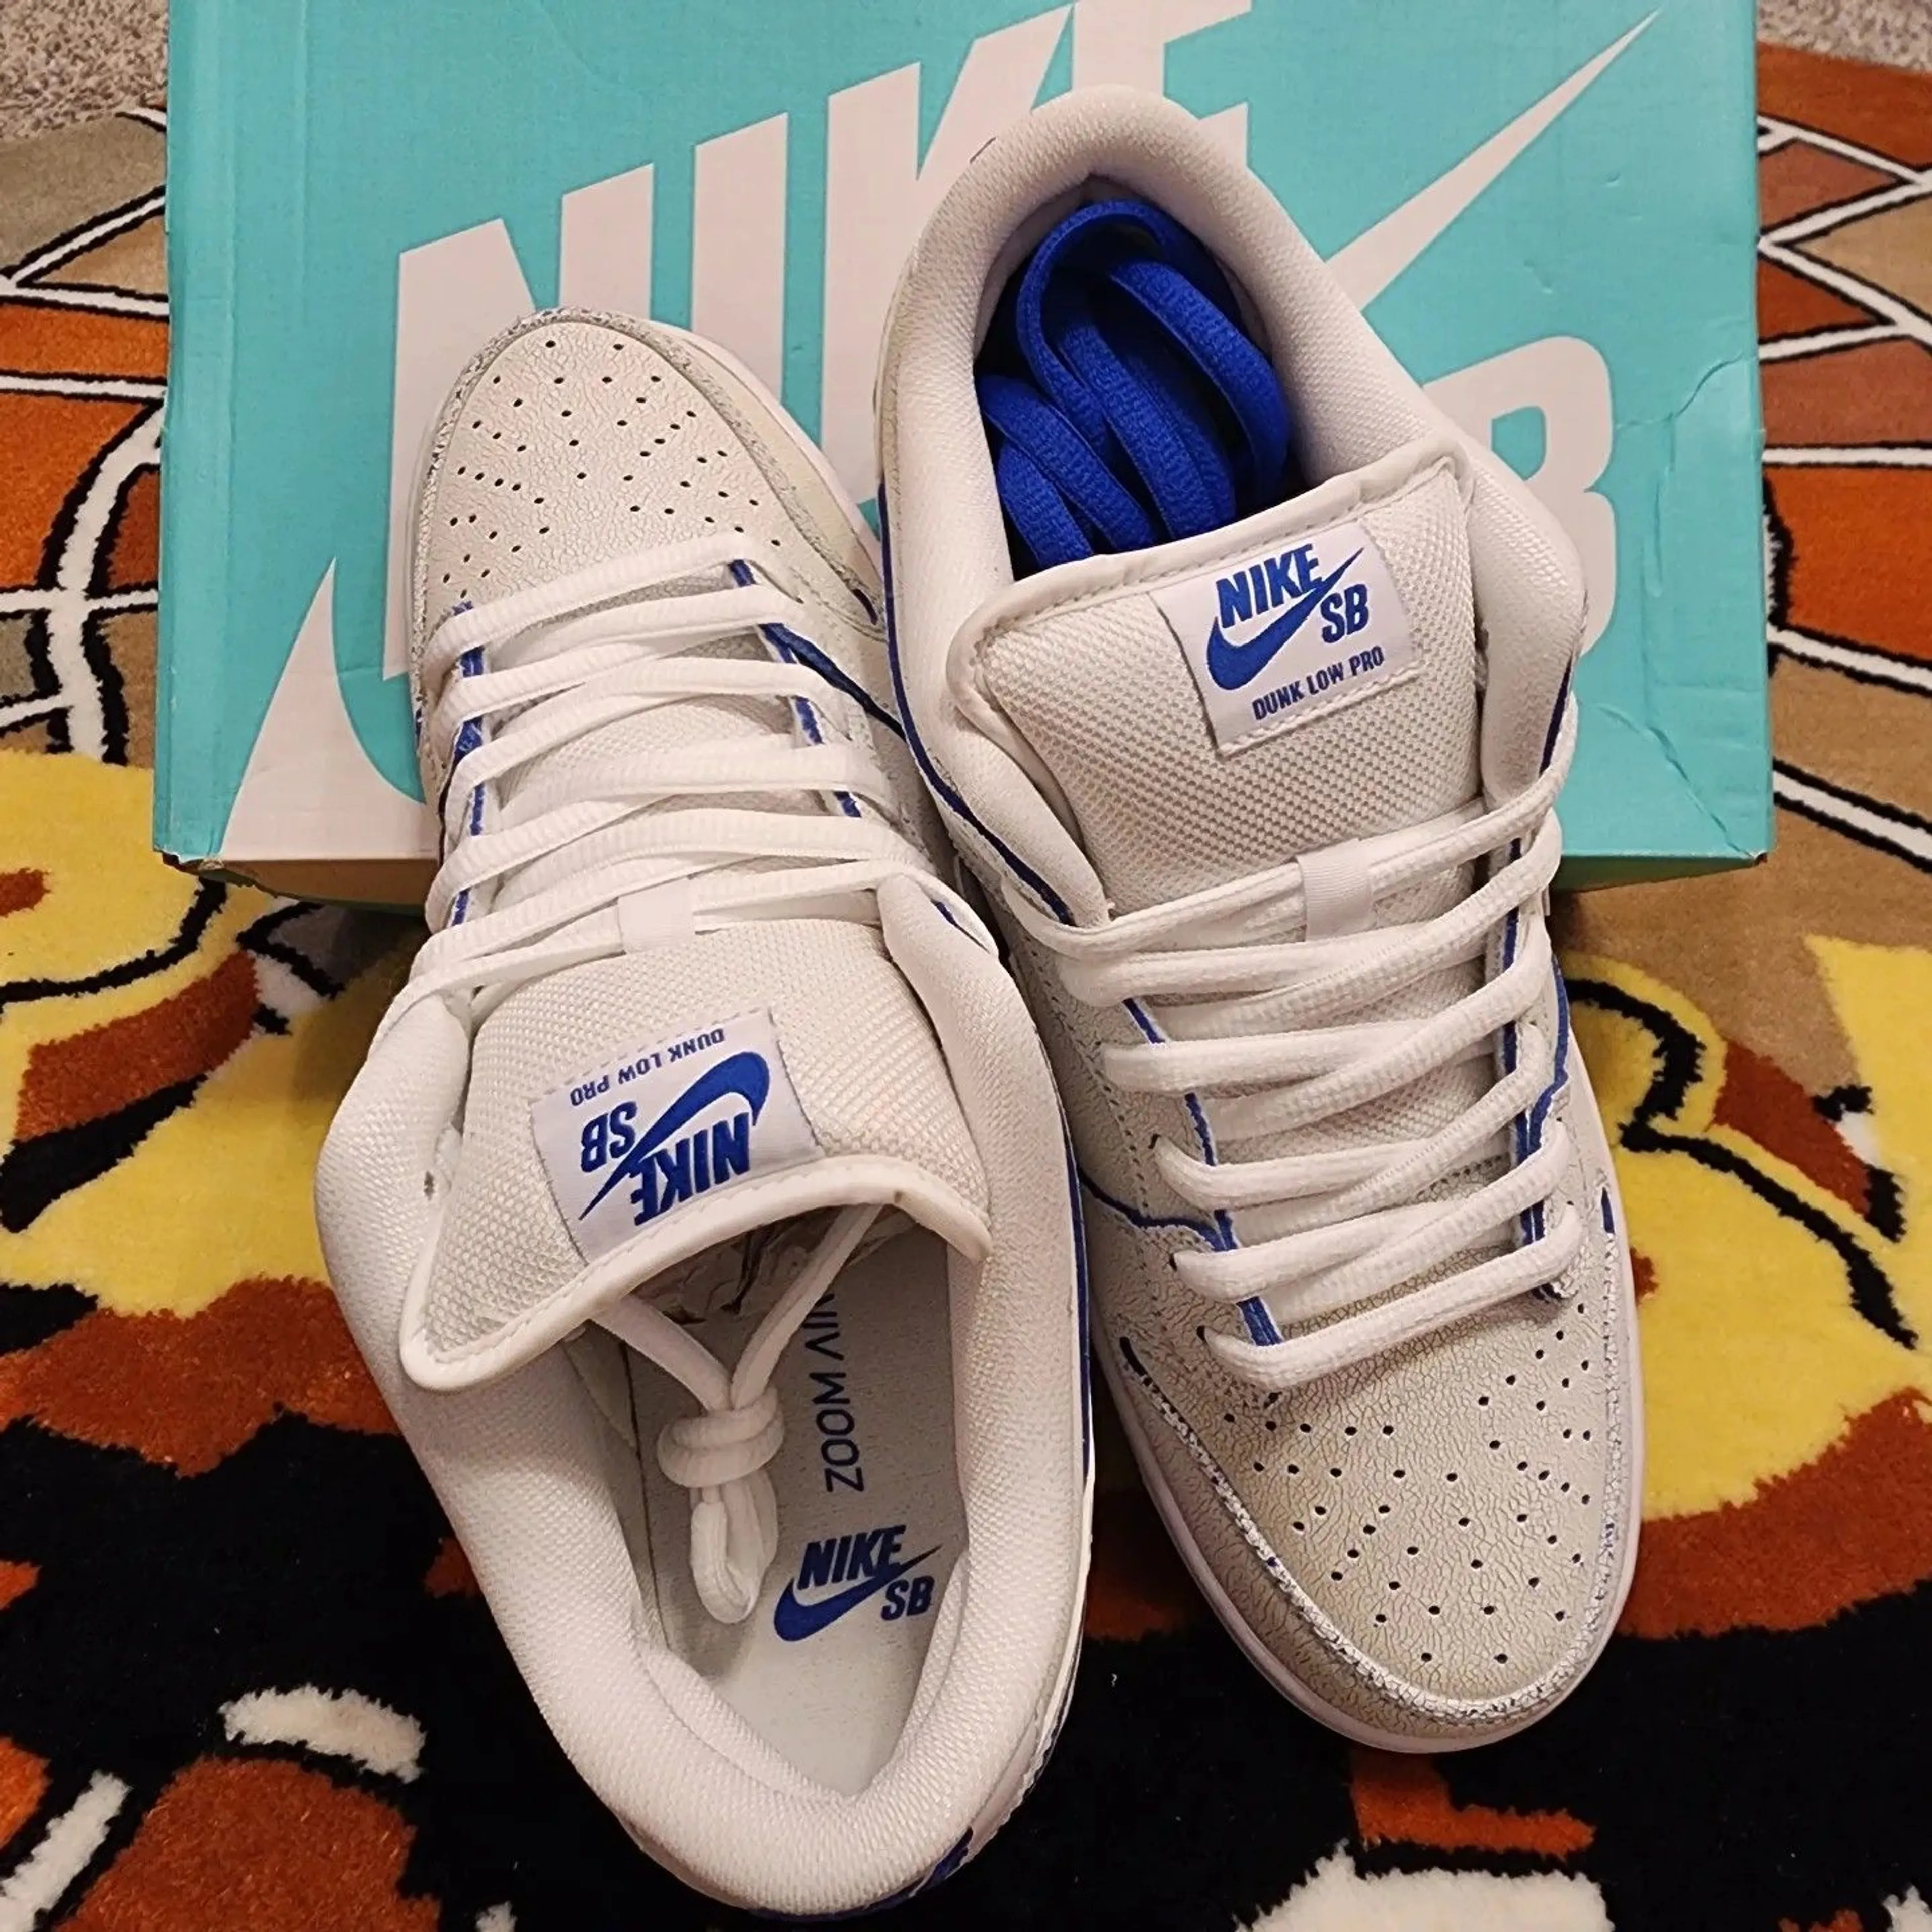 Nike SB DUNK LOW Premium - Cracked Leather Blue (2019) Men's Size 9.5  CJ6884-100 · Whatnot: Buy